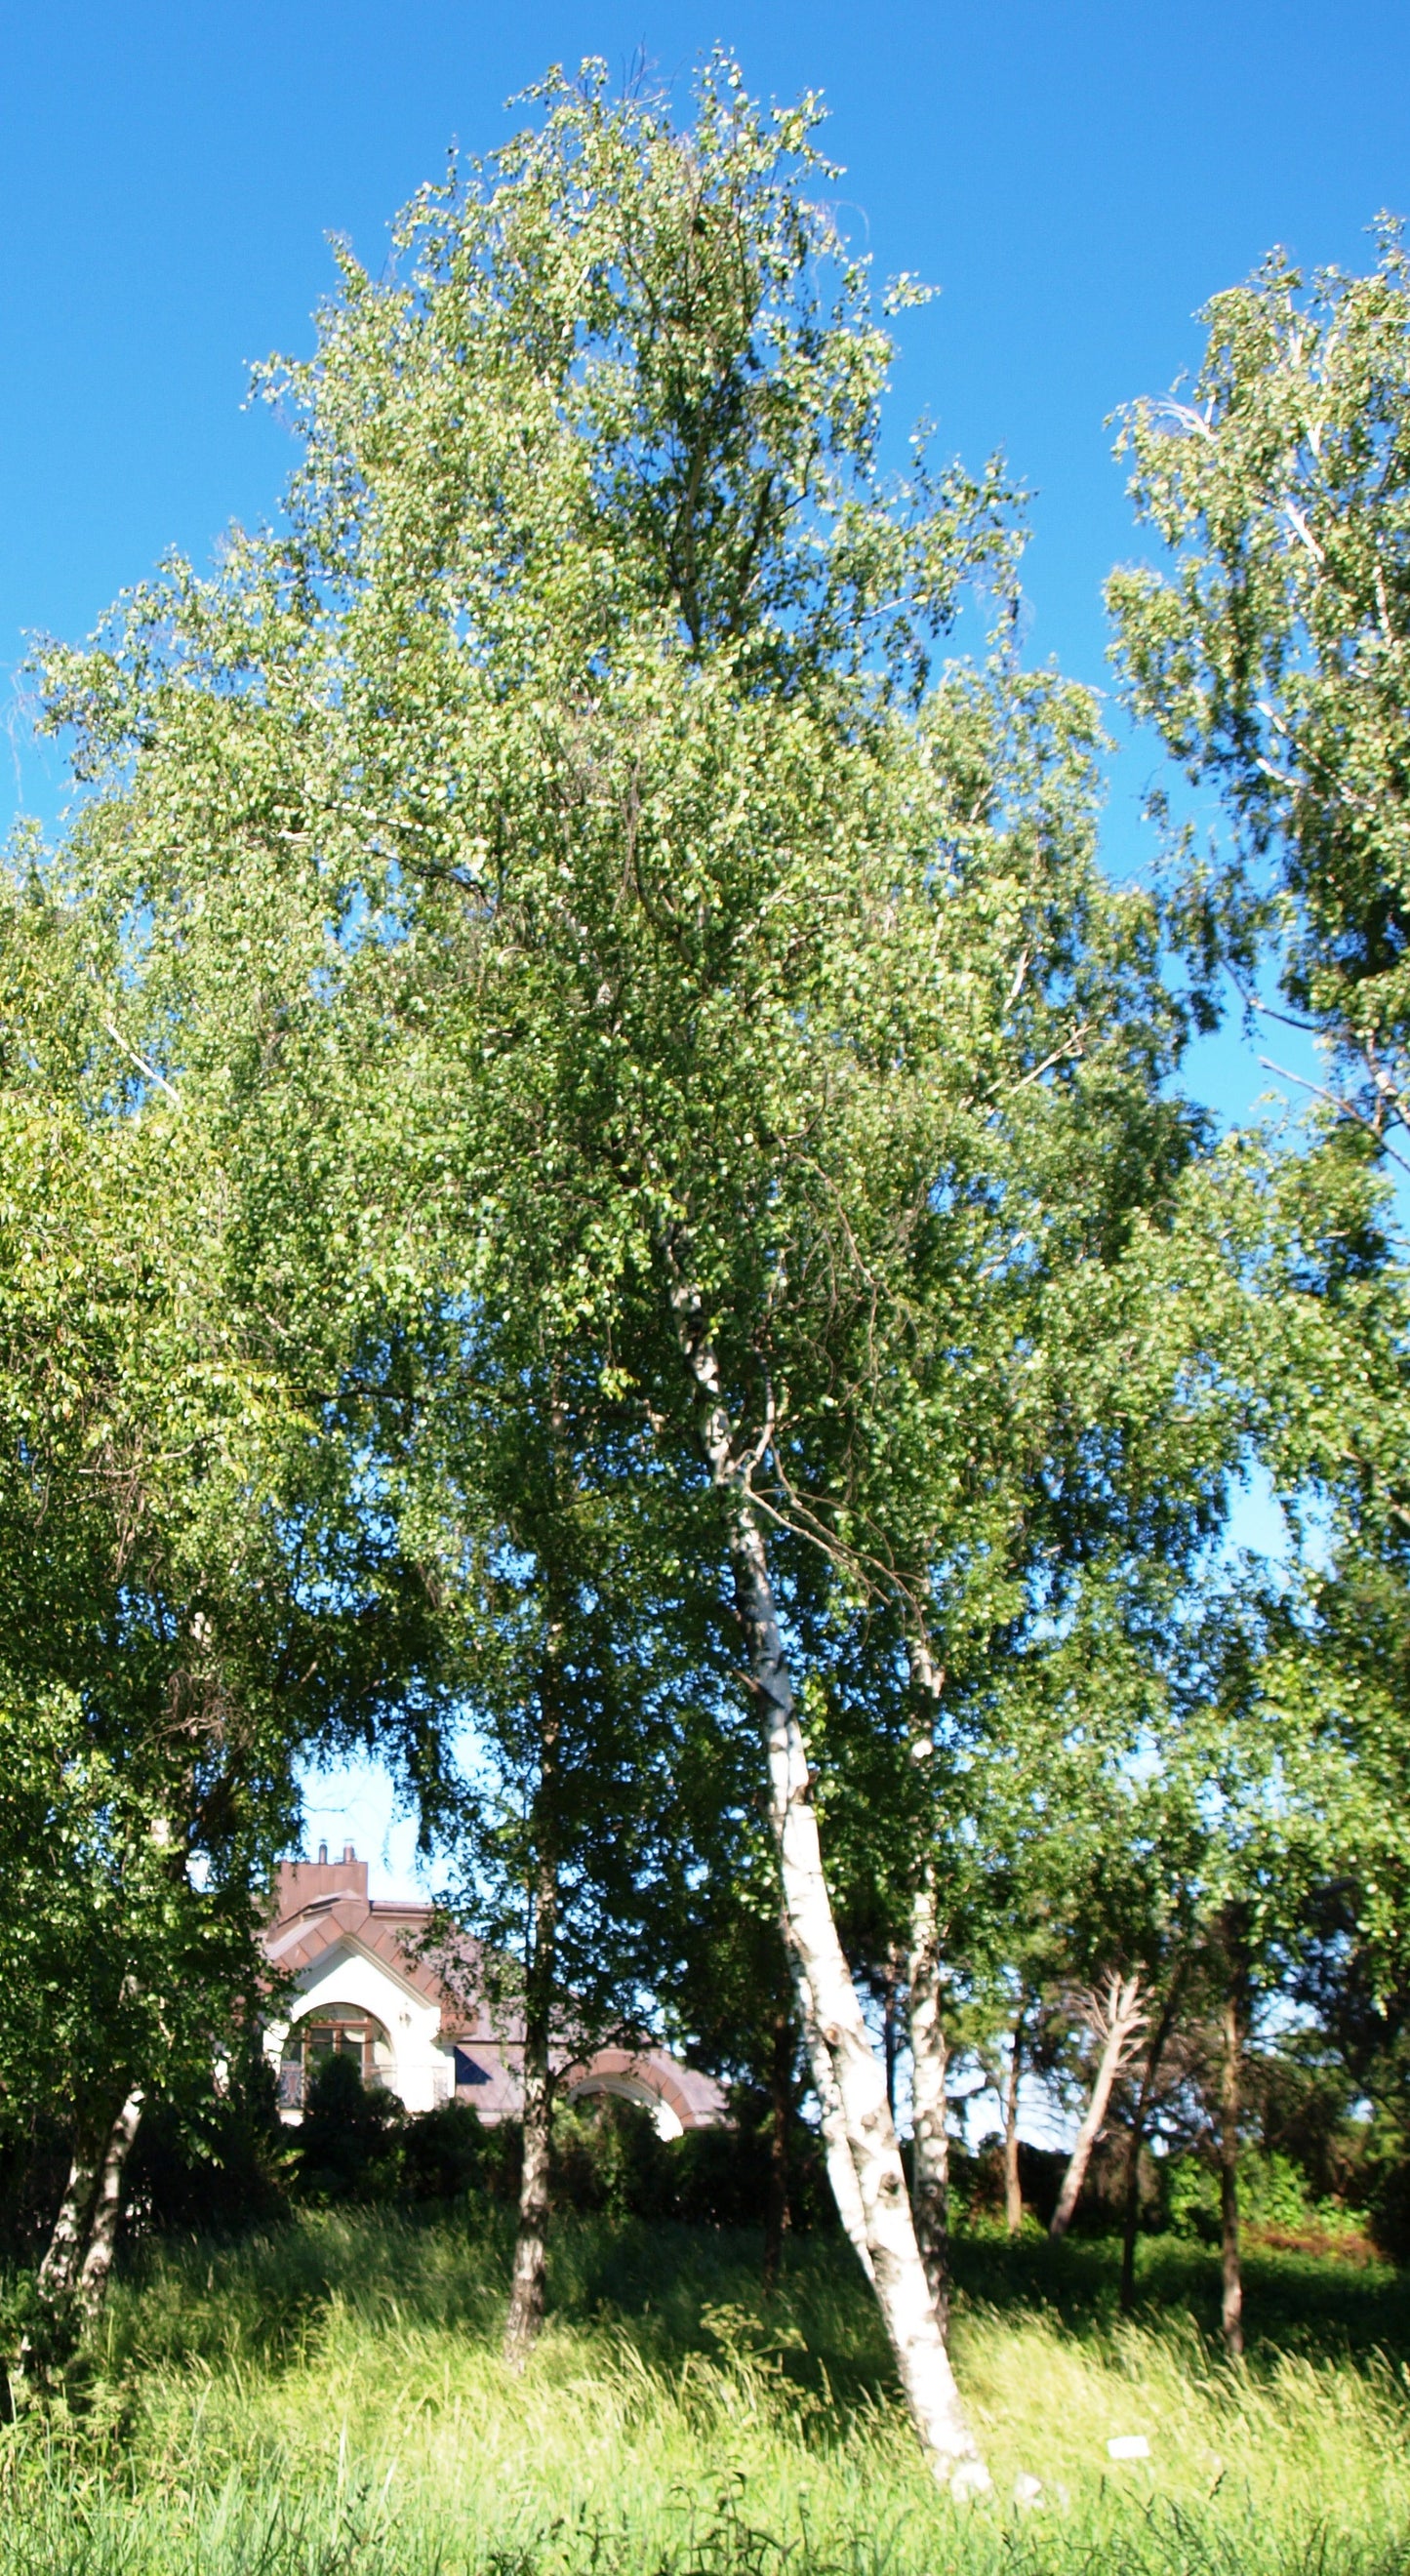 White Spire Birch (Betula populifolia 'Whitespire' broken strobiles)